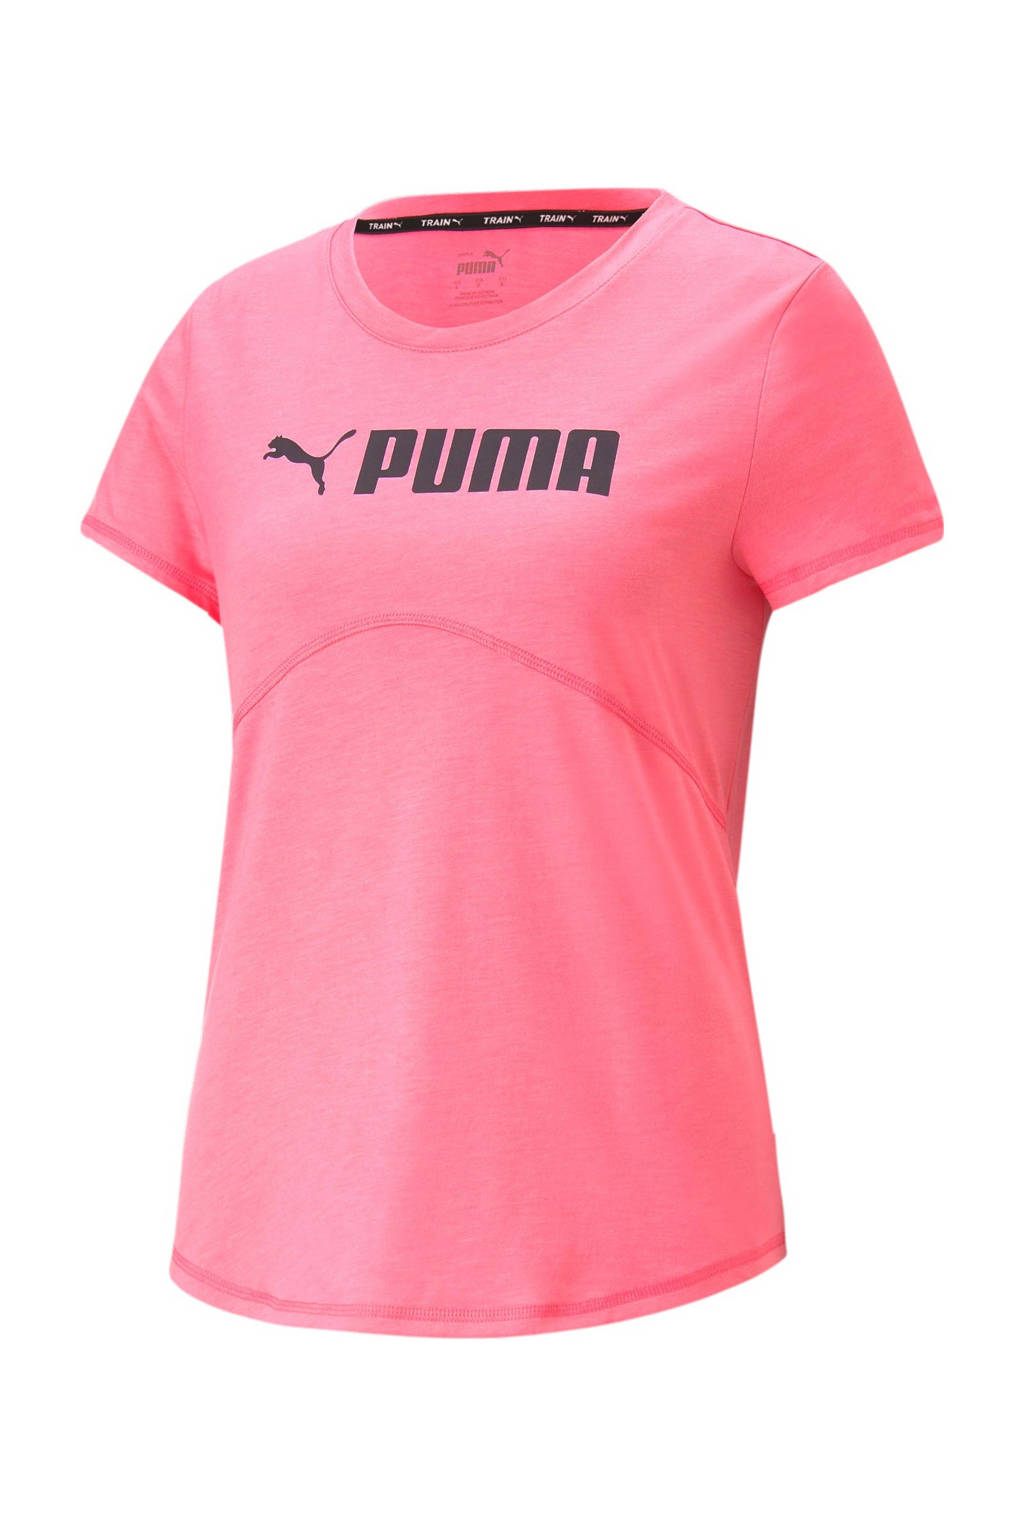 Puma sport T-shirt Heather roze